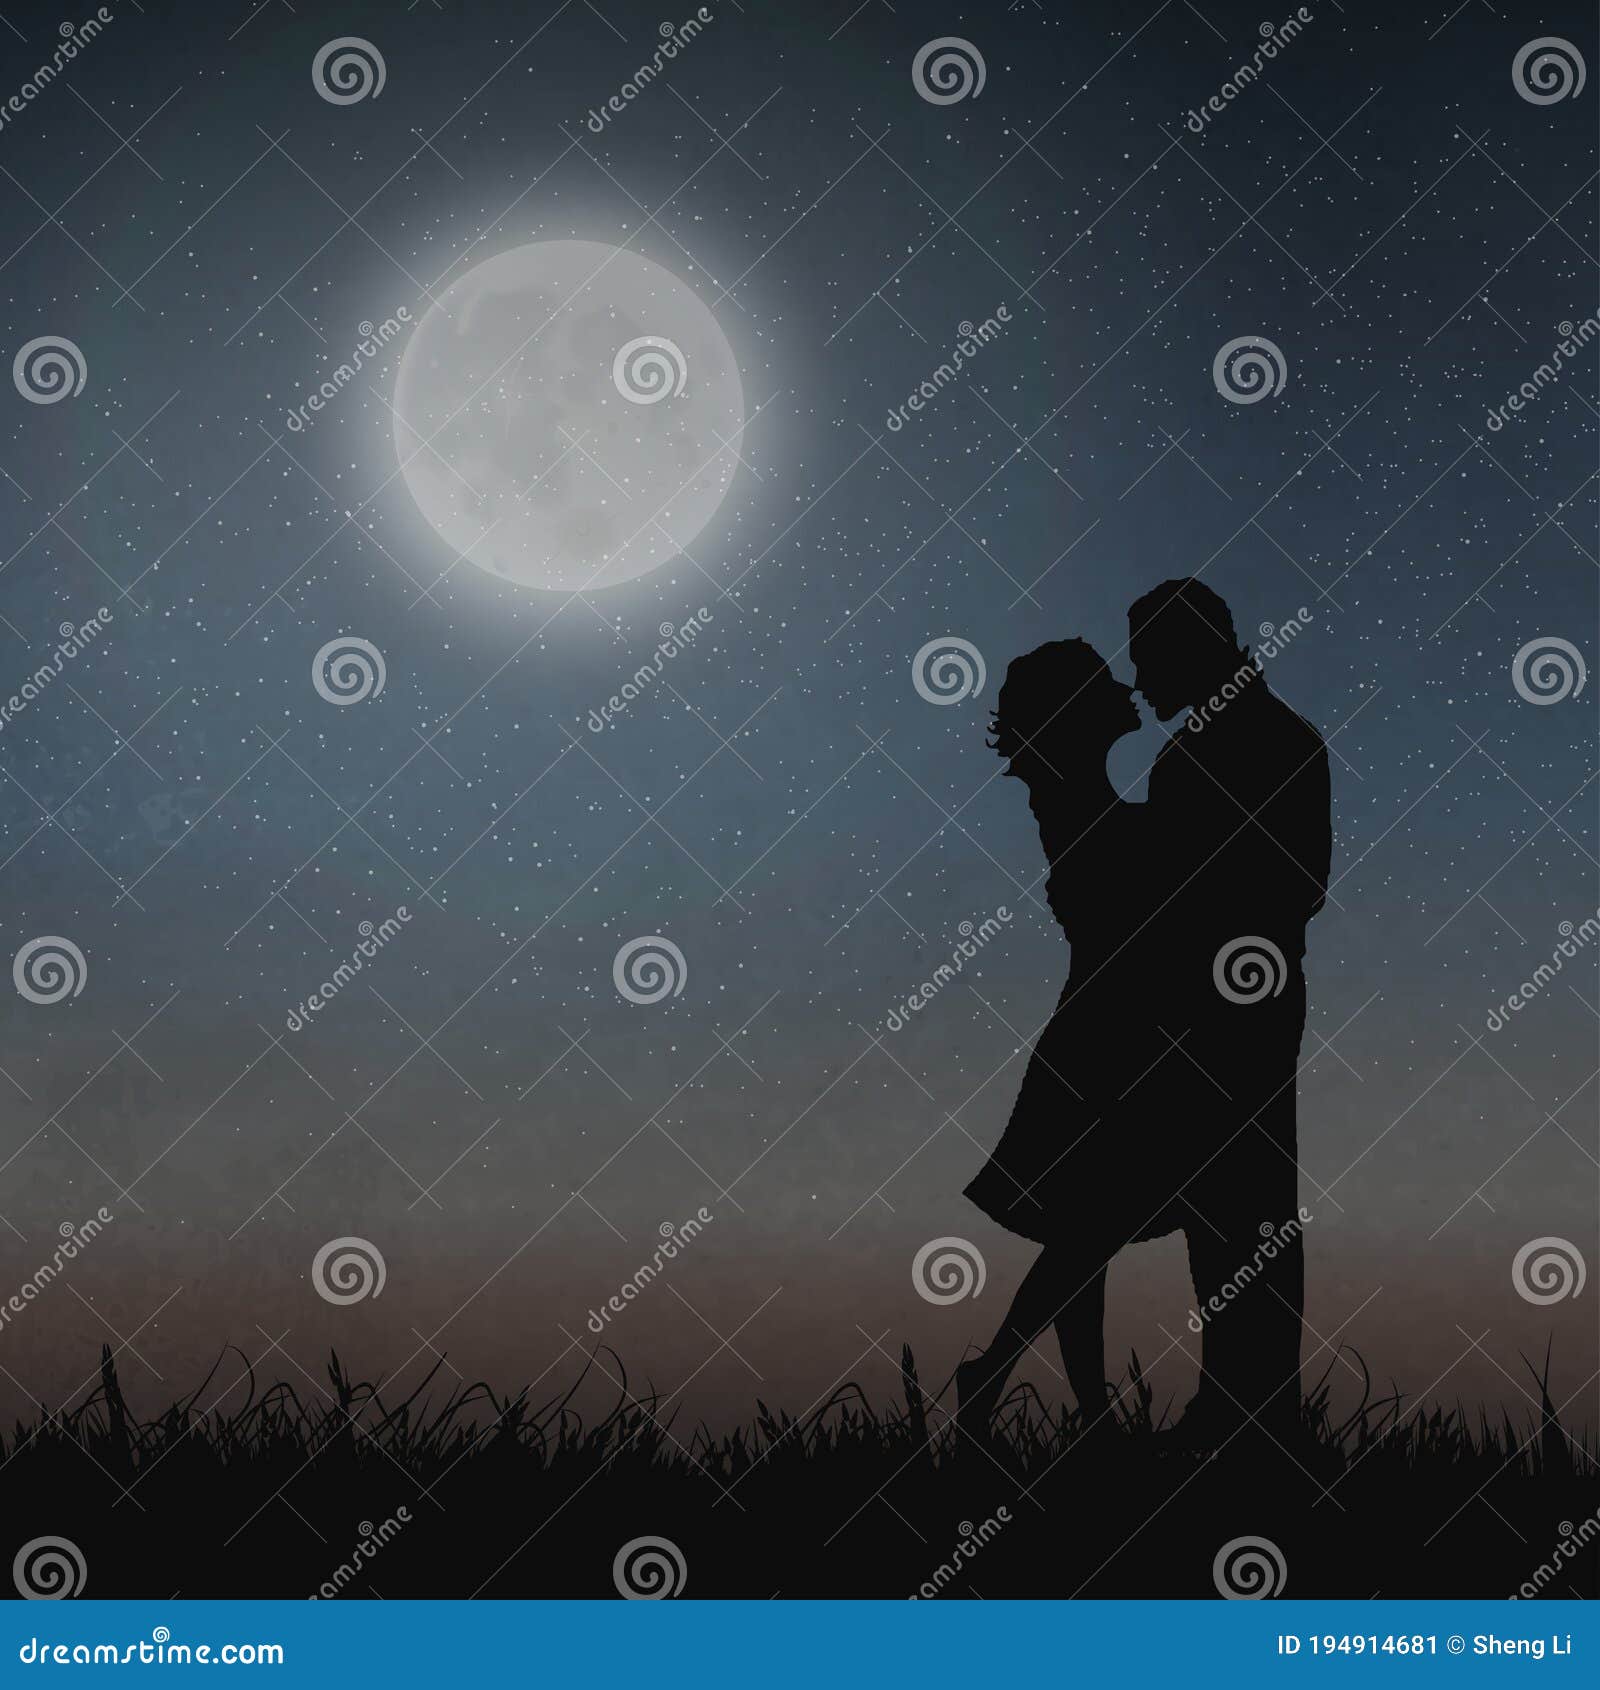 Lovers Under The Moonlight Kissing Stock Vector Illustration Of Beauty Elegance